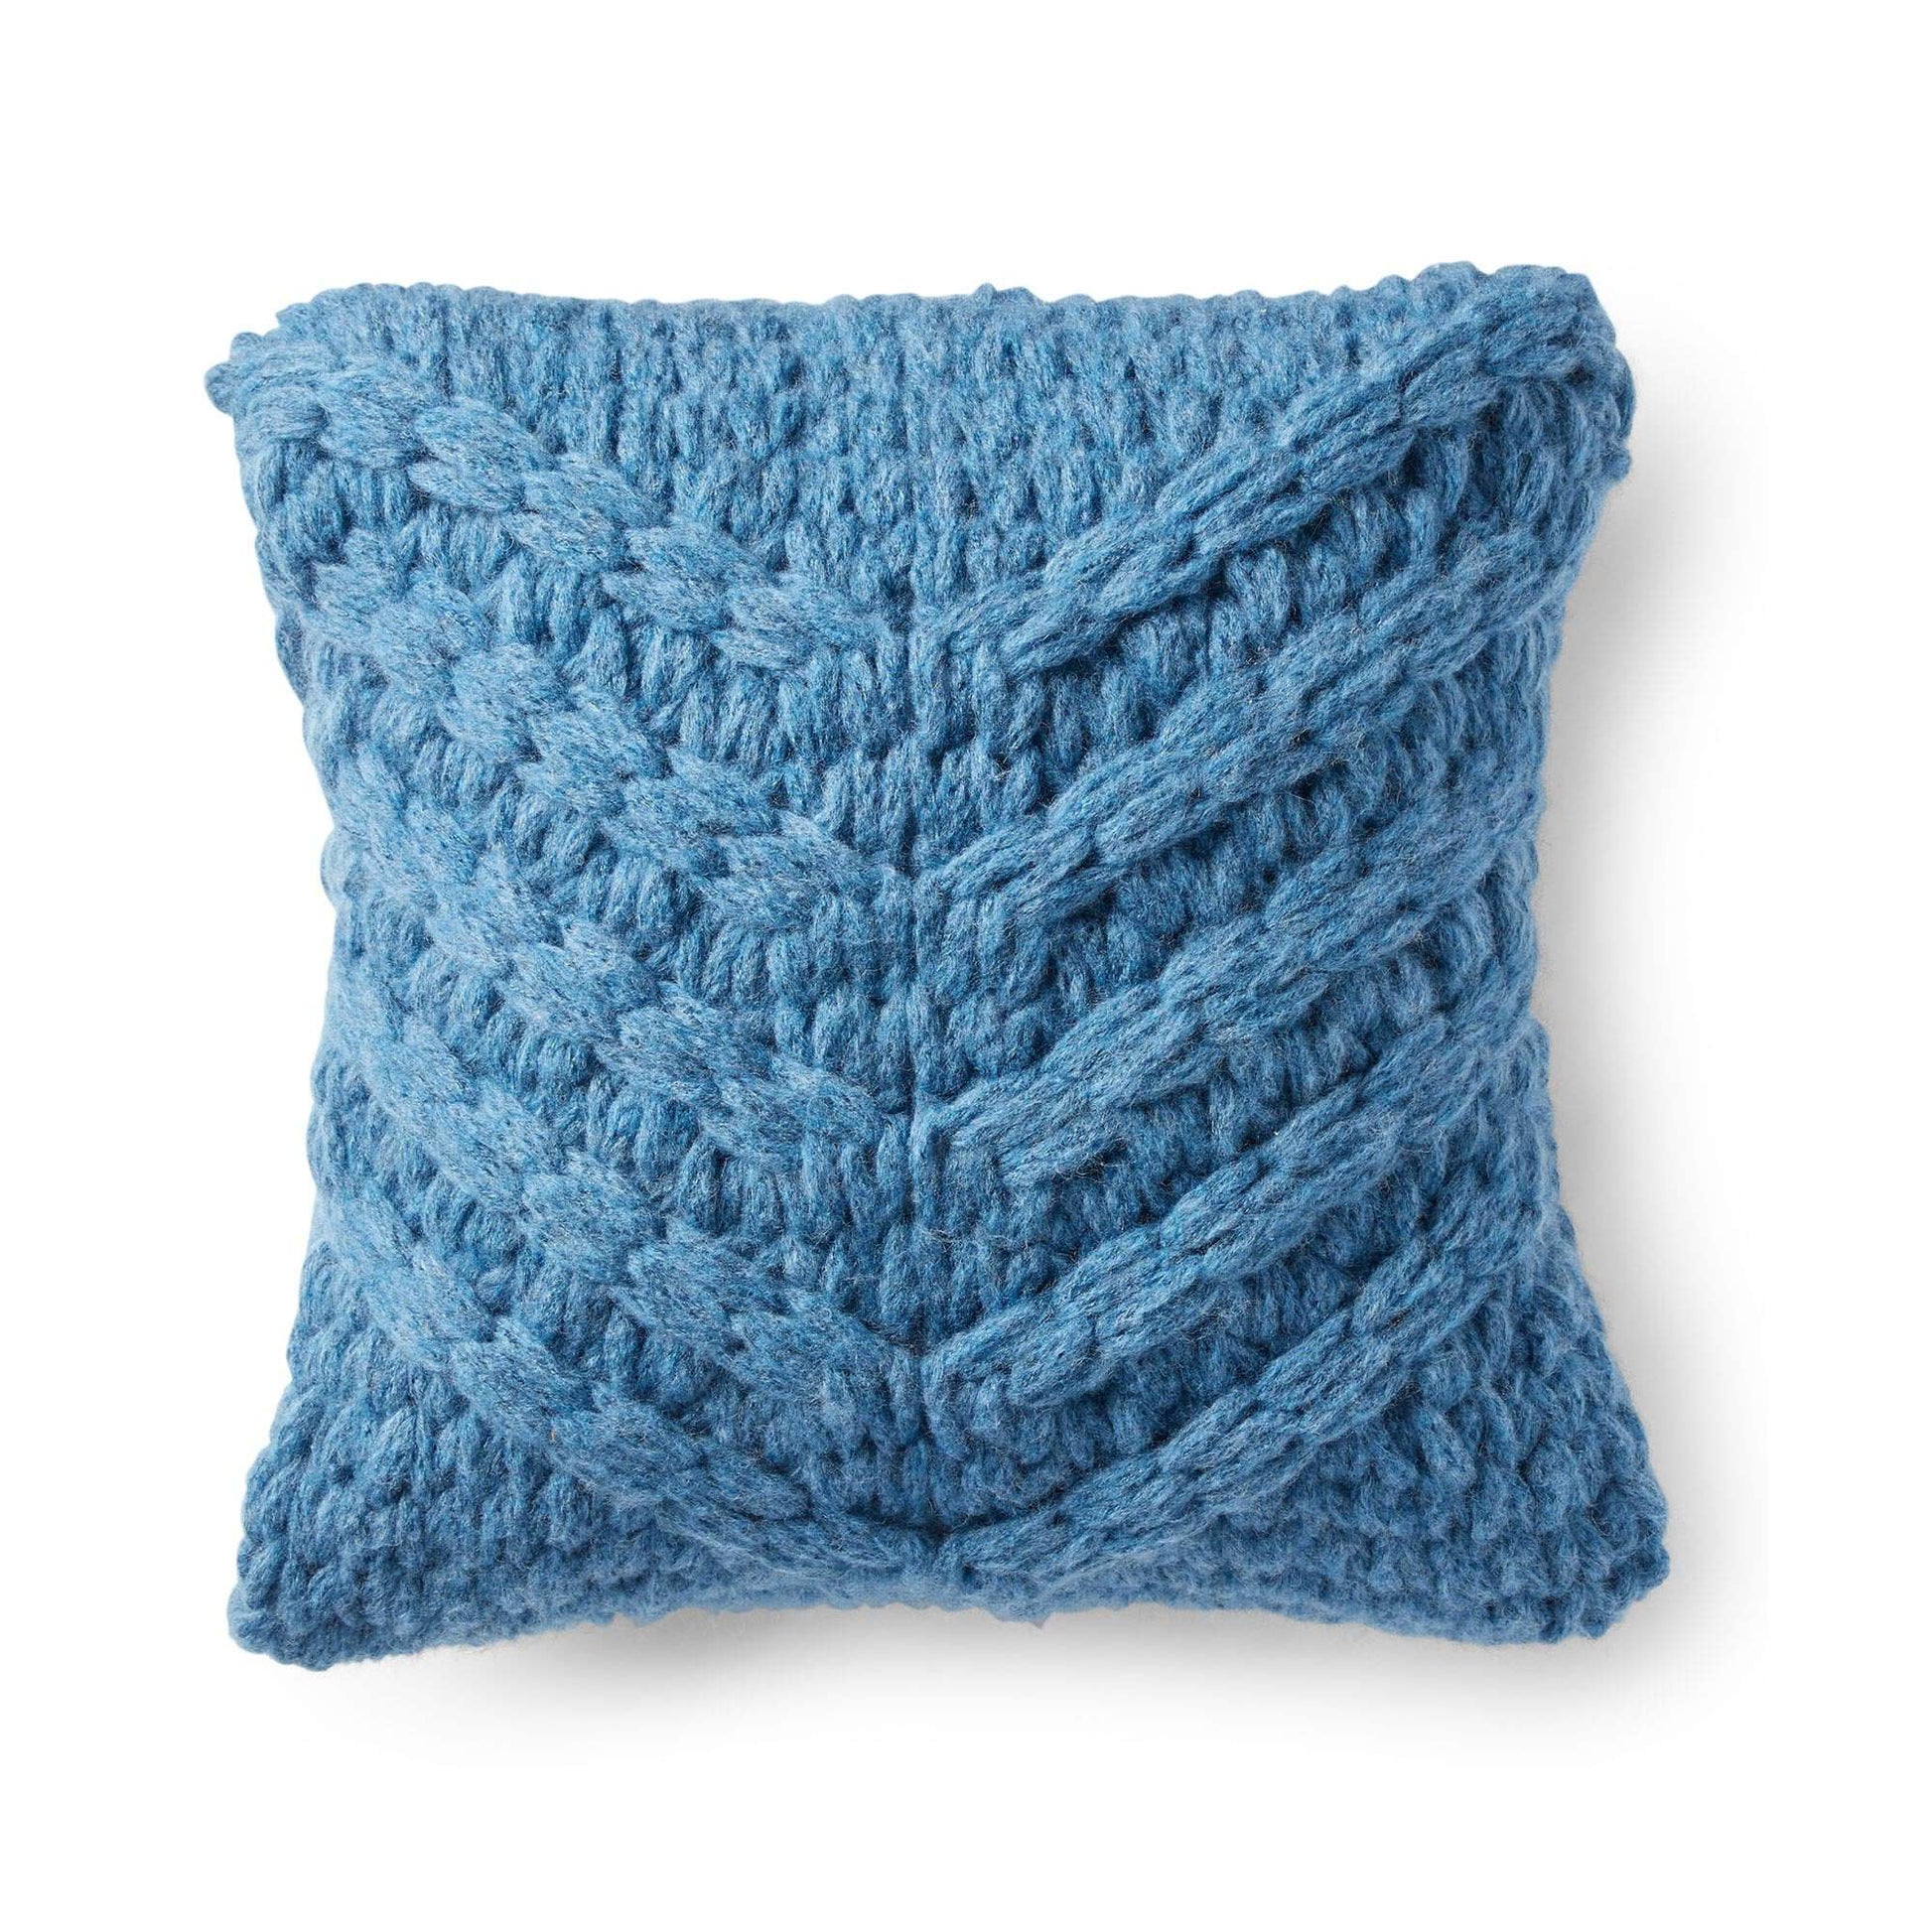 Bernat Alize EZ Cable Pillow Craft Pillow made in Bernat Alize EZ Wool yarn